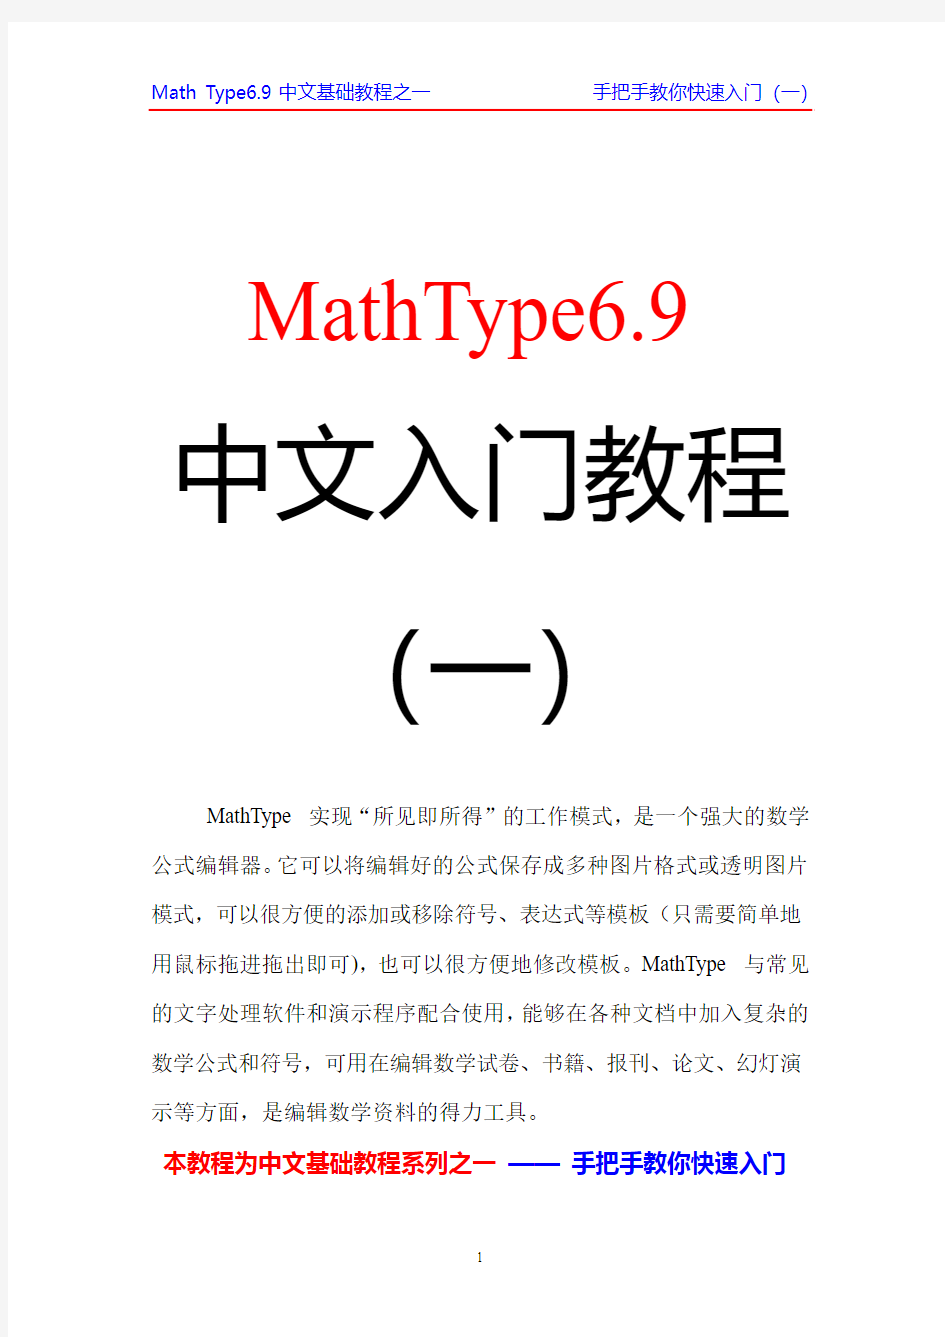 MathType6.9中文基础教程之一